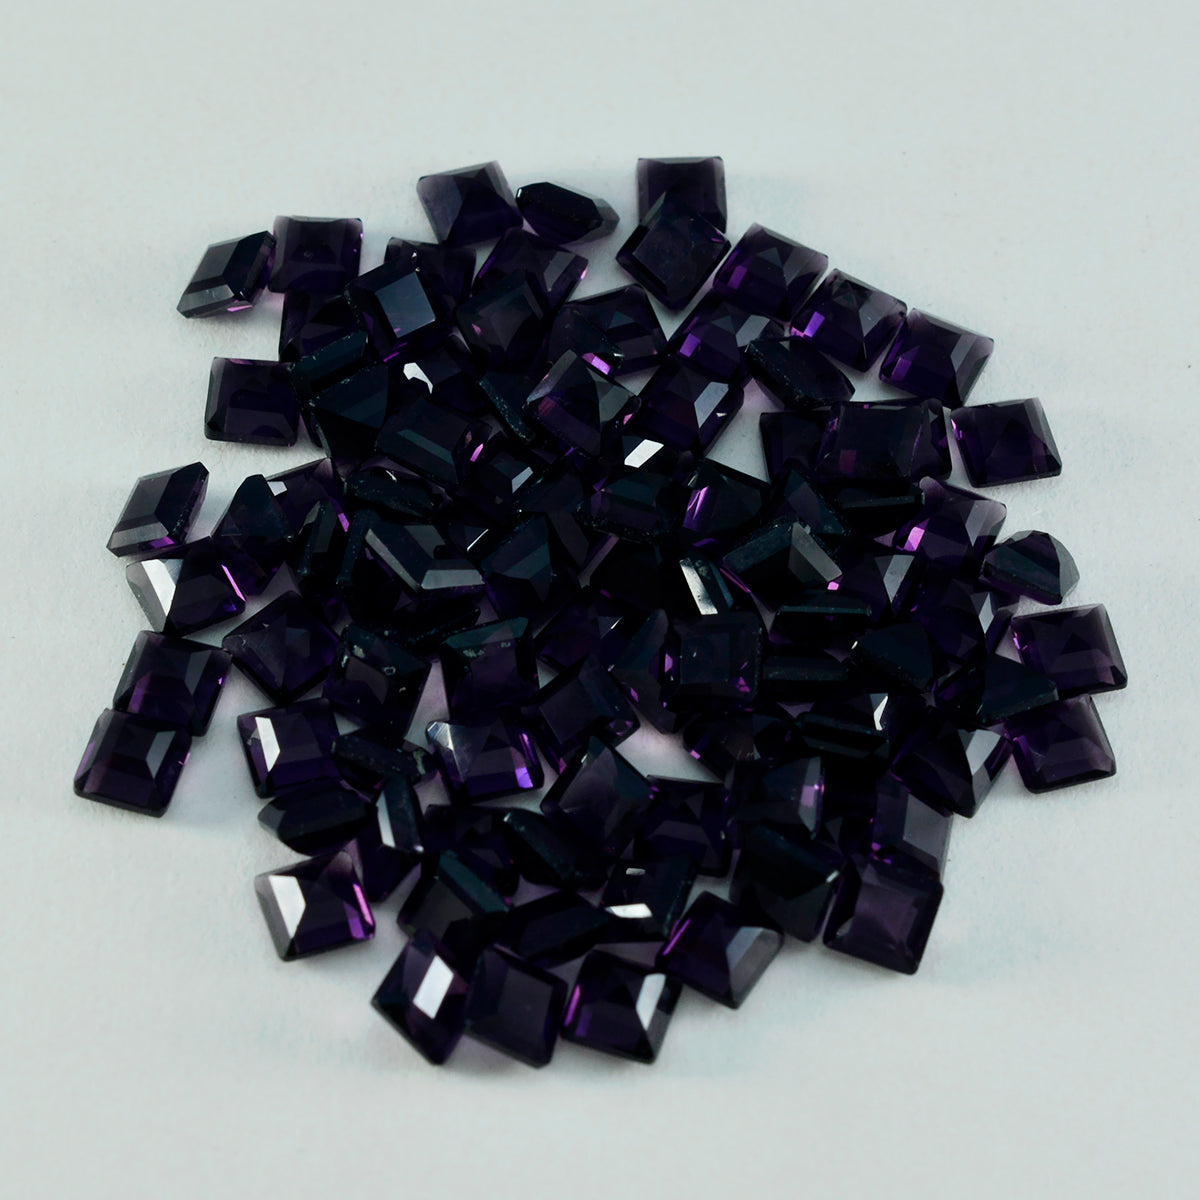 Riyogems 1PC Purple Amethyst CZ Faceted 5x5 mm Square Shape wonderful Quality Gem